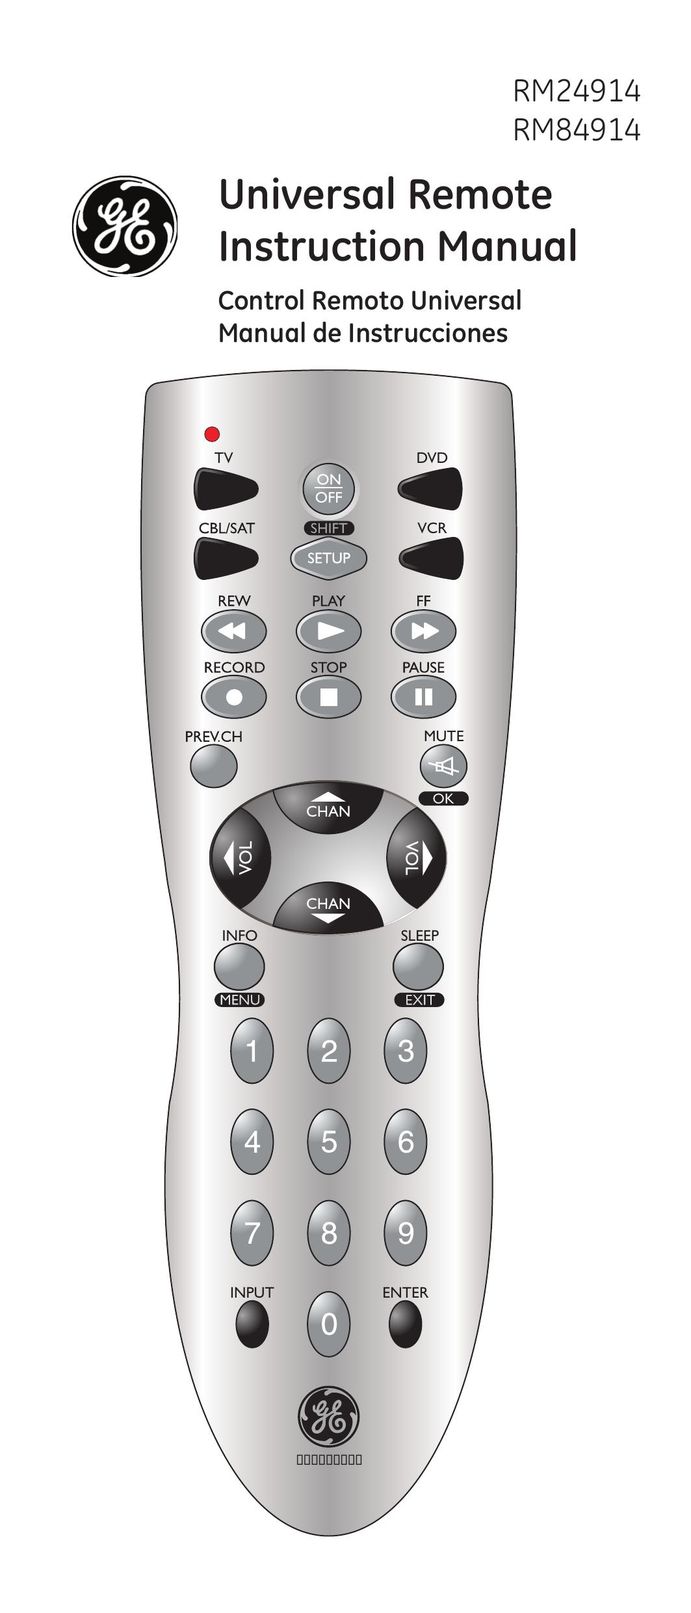 Jasco RM24914 Universal Remote User Manual